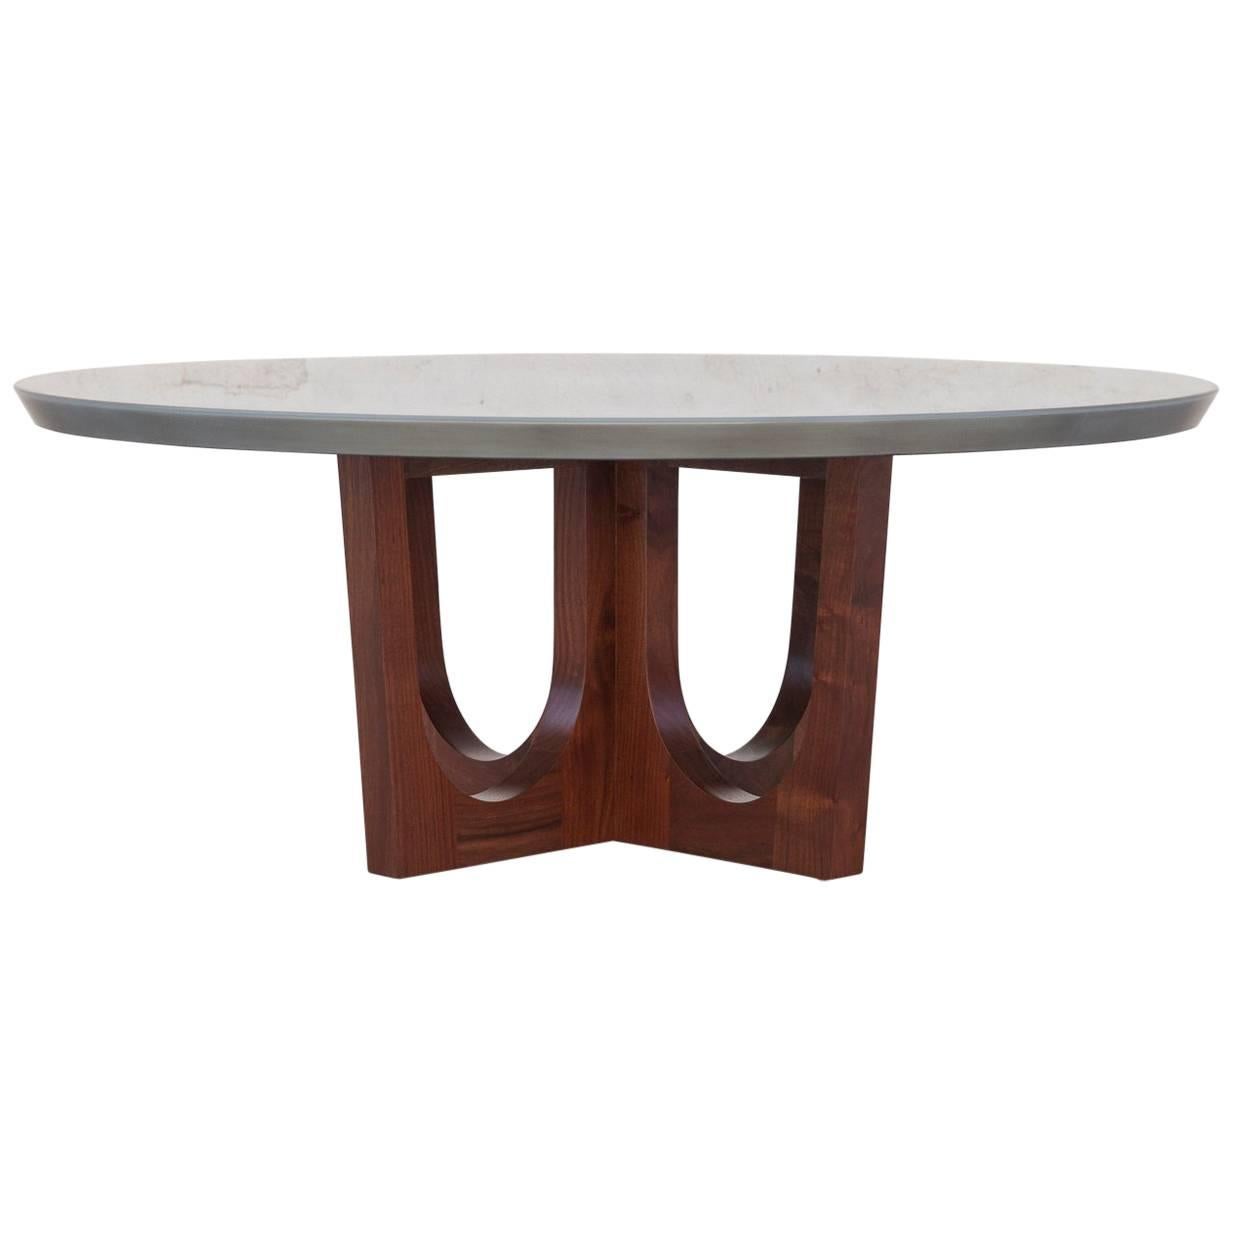 Grand Pedestal Coffee Table, Customizable Metal, Wood and Resin